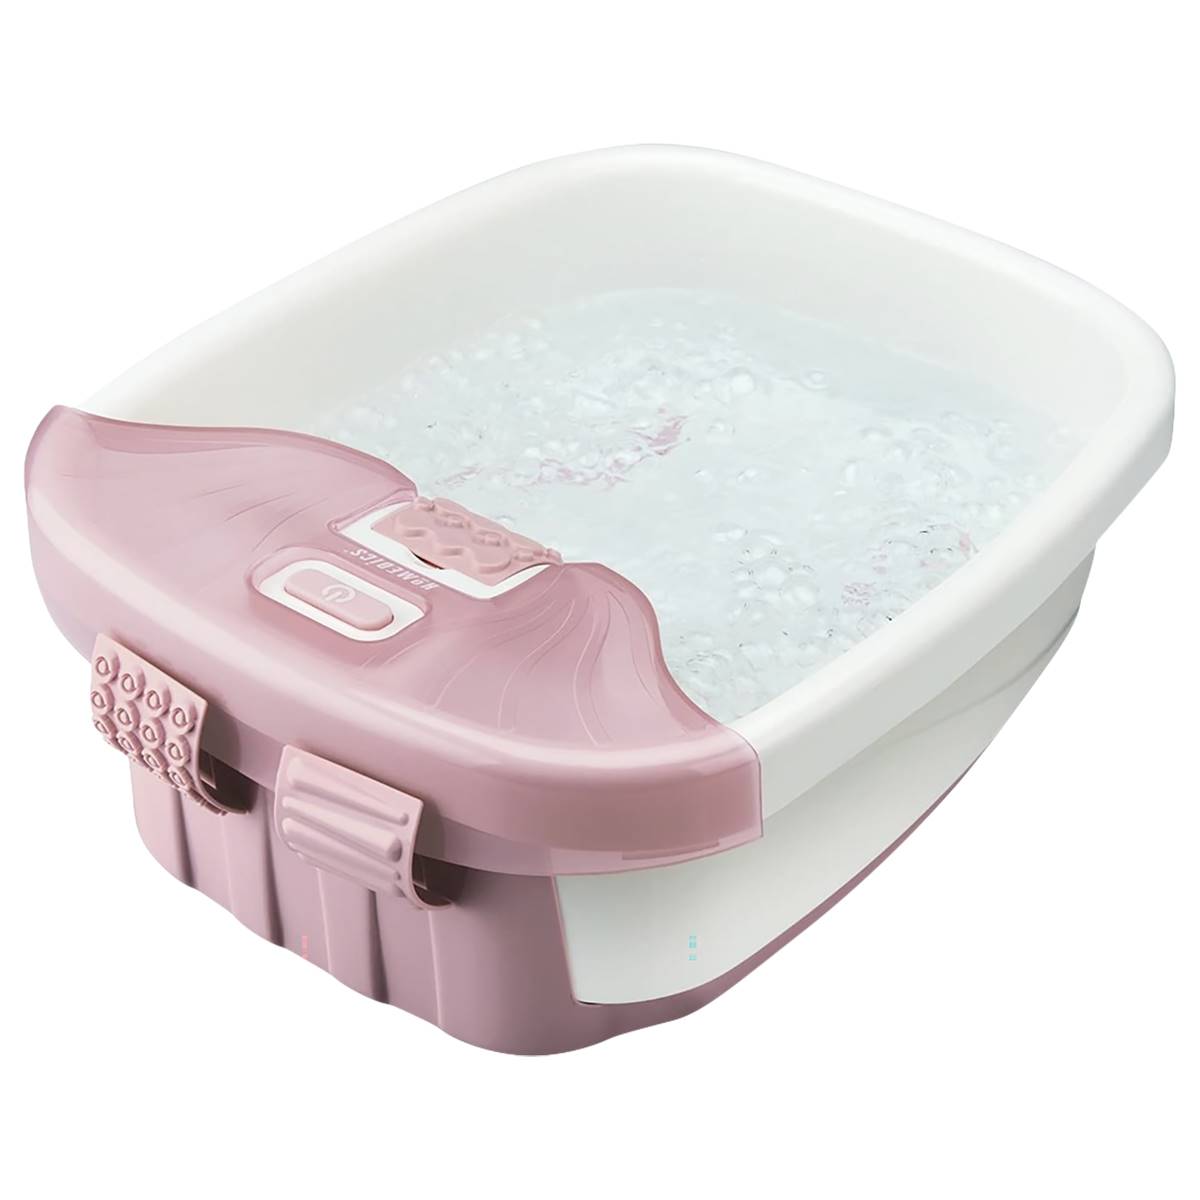 HoMedics Bubblebliss Deluxe Foot Bath - Pink